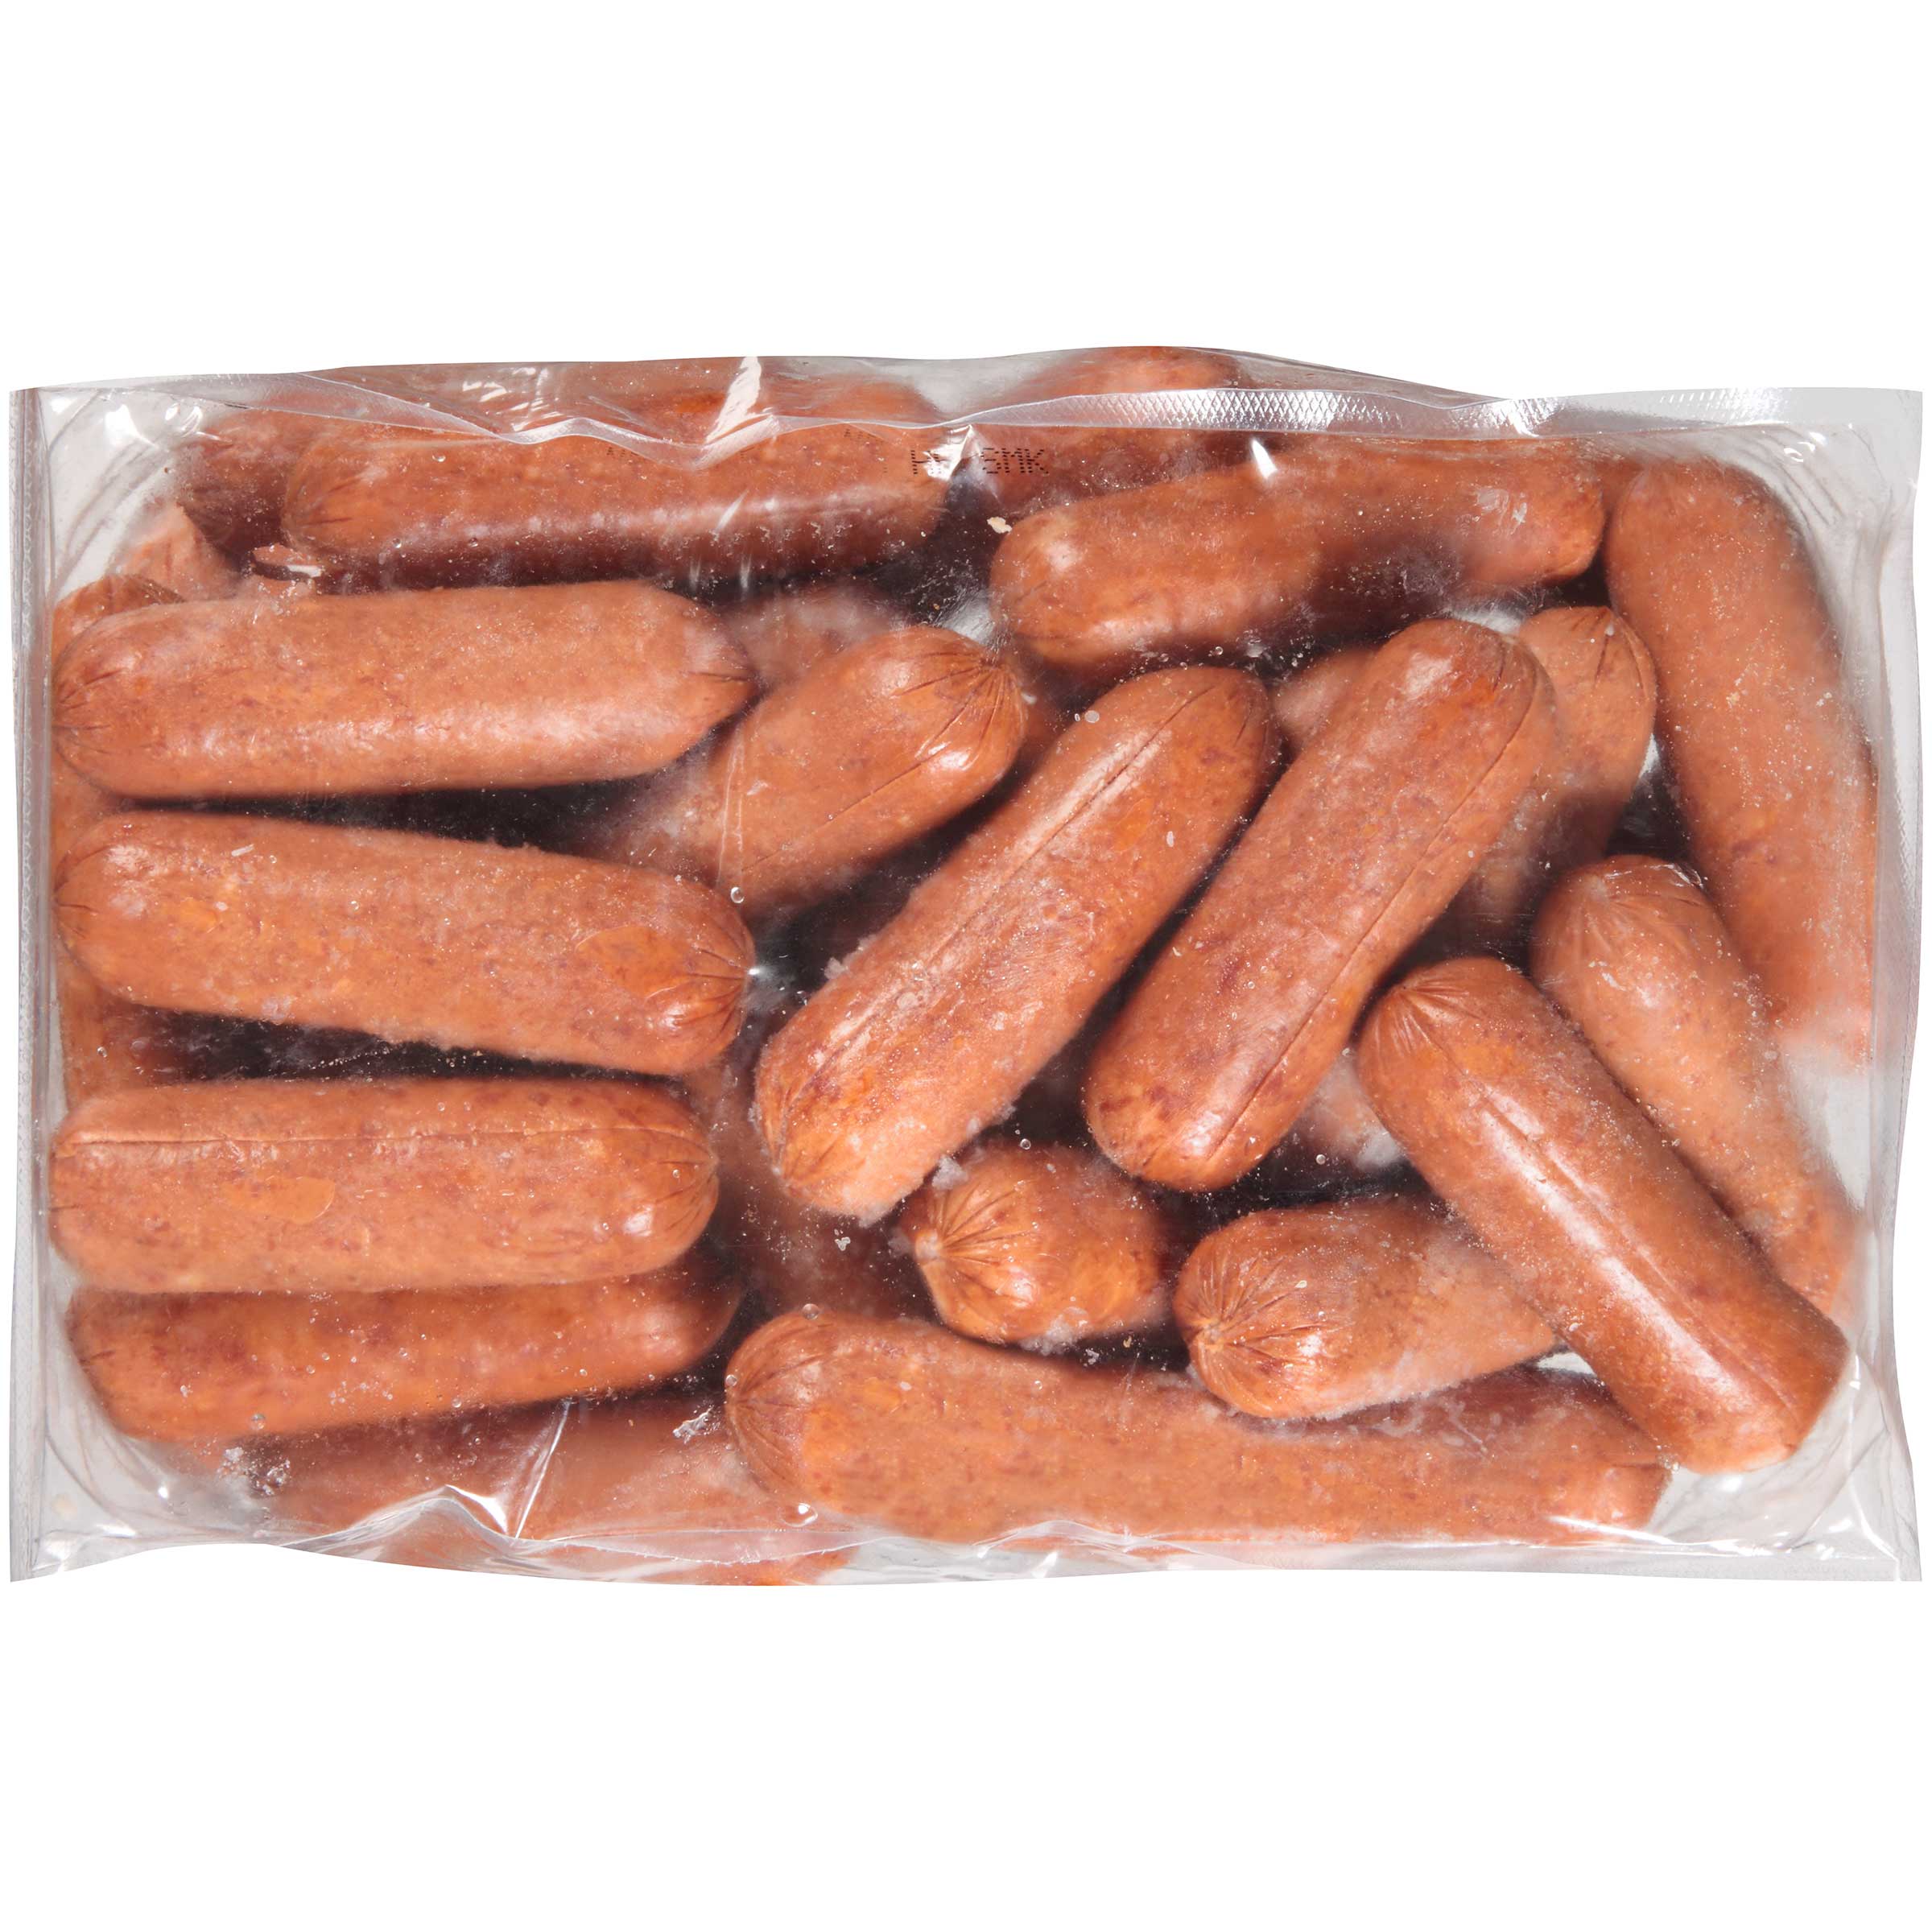 Hillshire Farms Original Split Smoked Sausage, 6 Pound -- 2 per case.